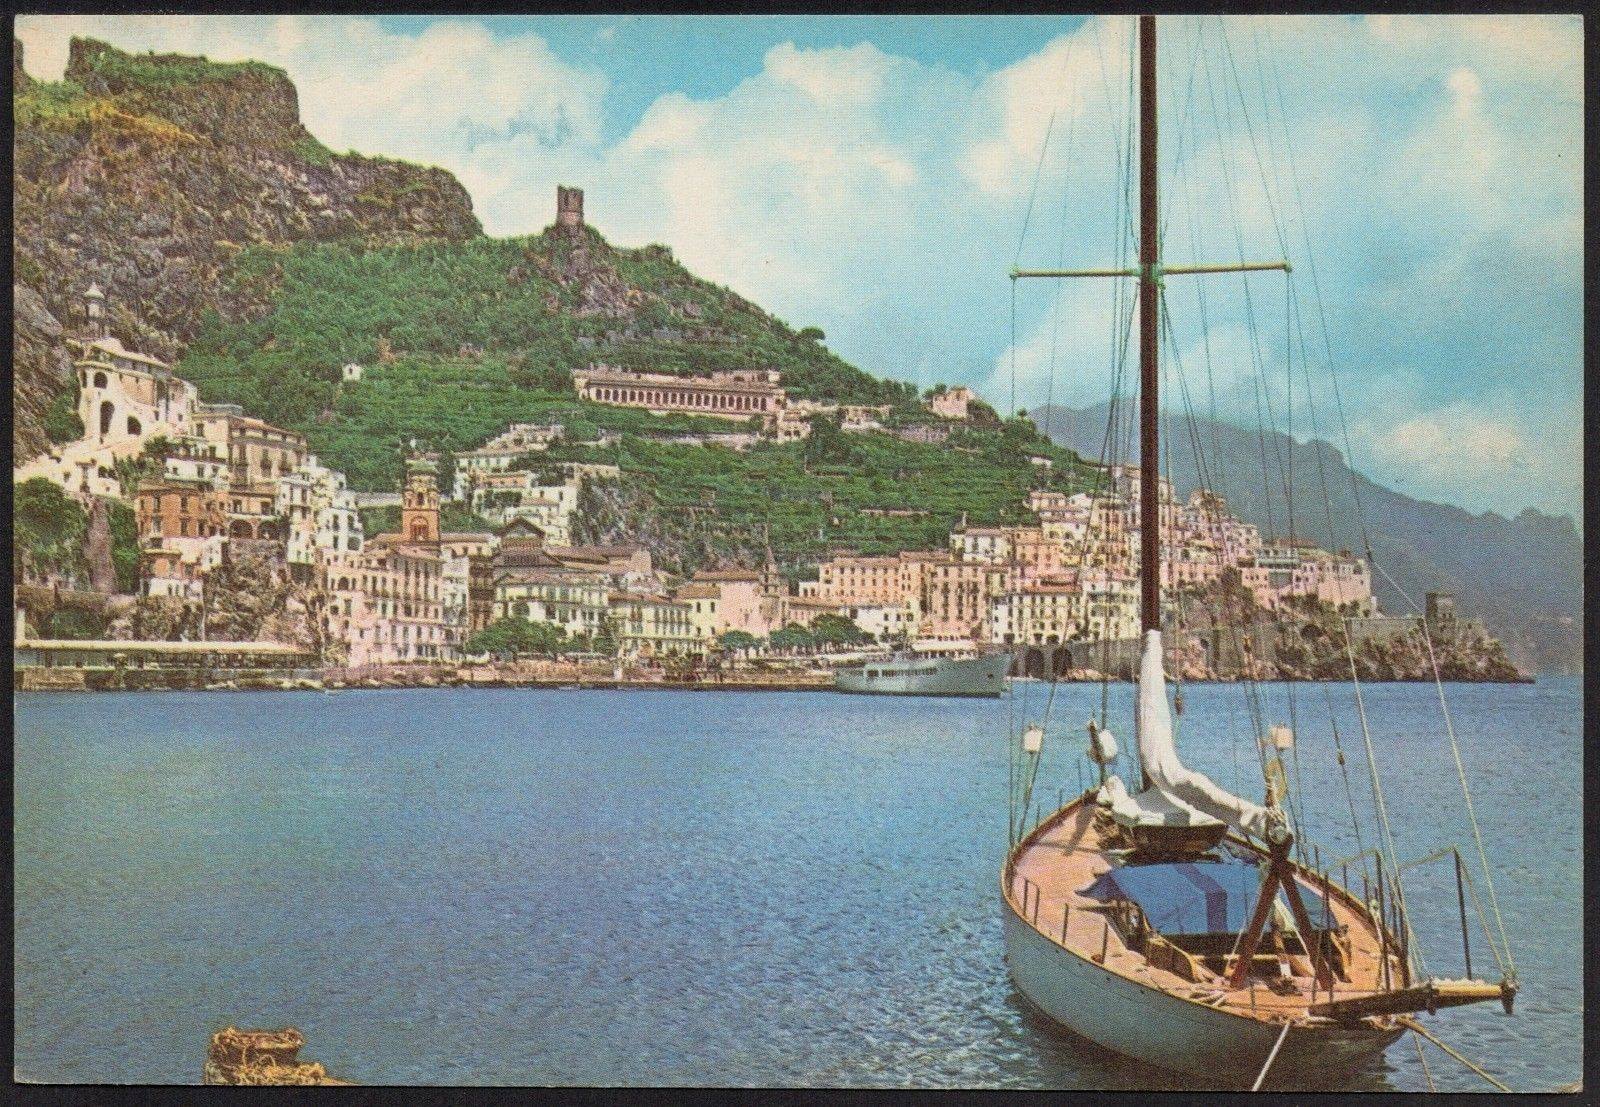 The yacht leaves Amalfi port 1954.